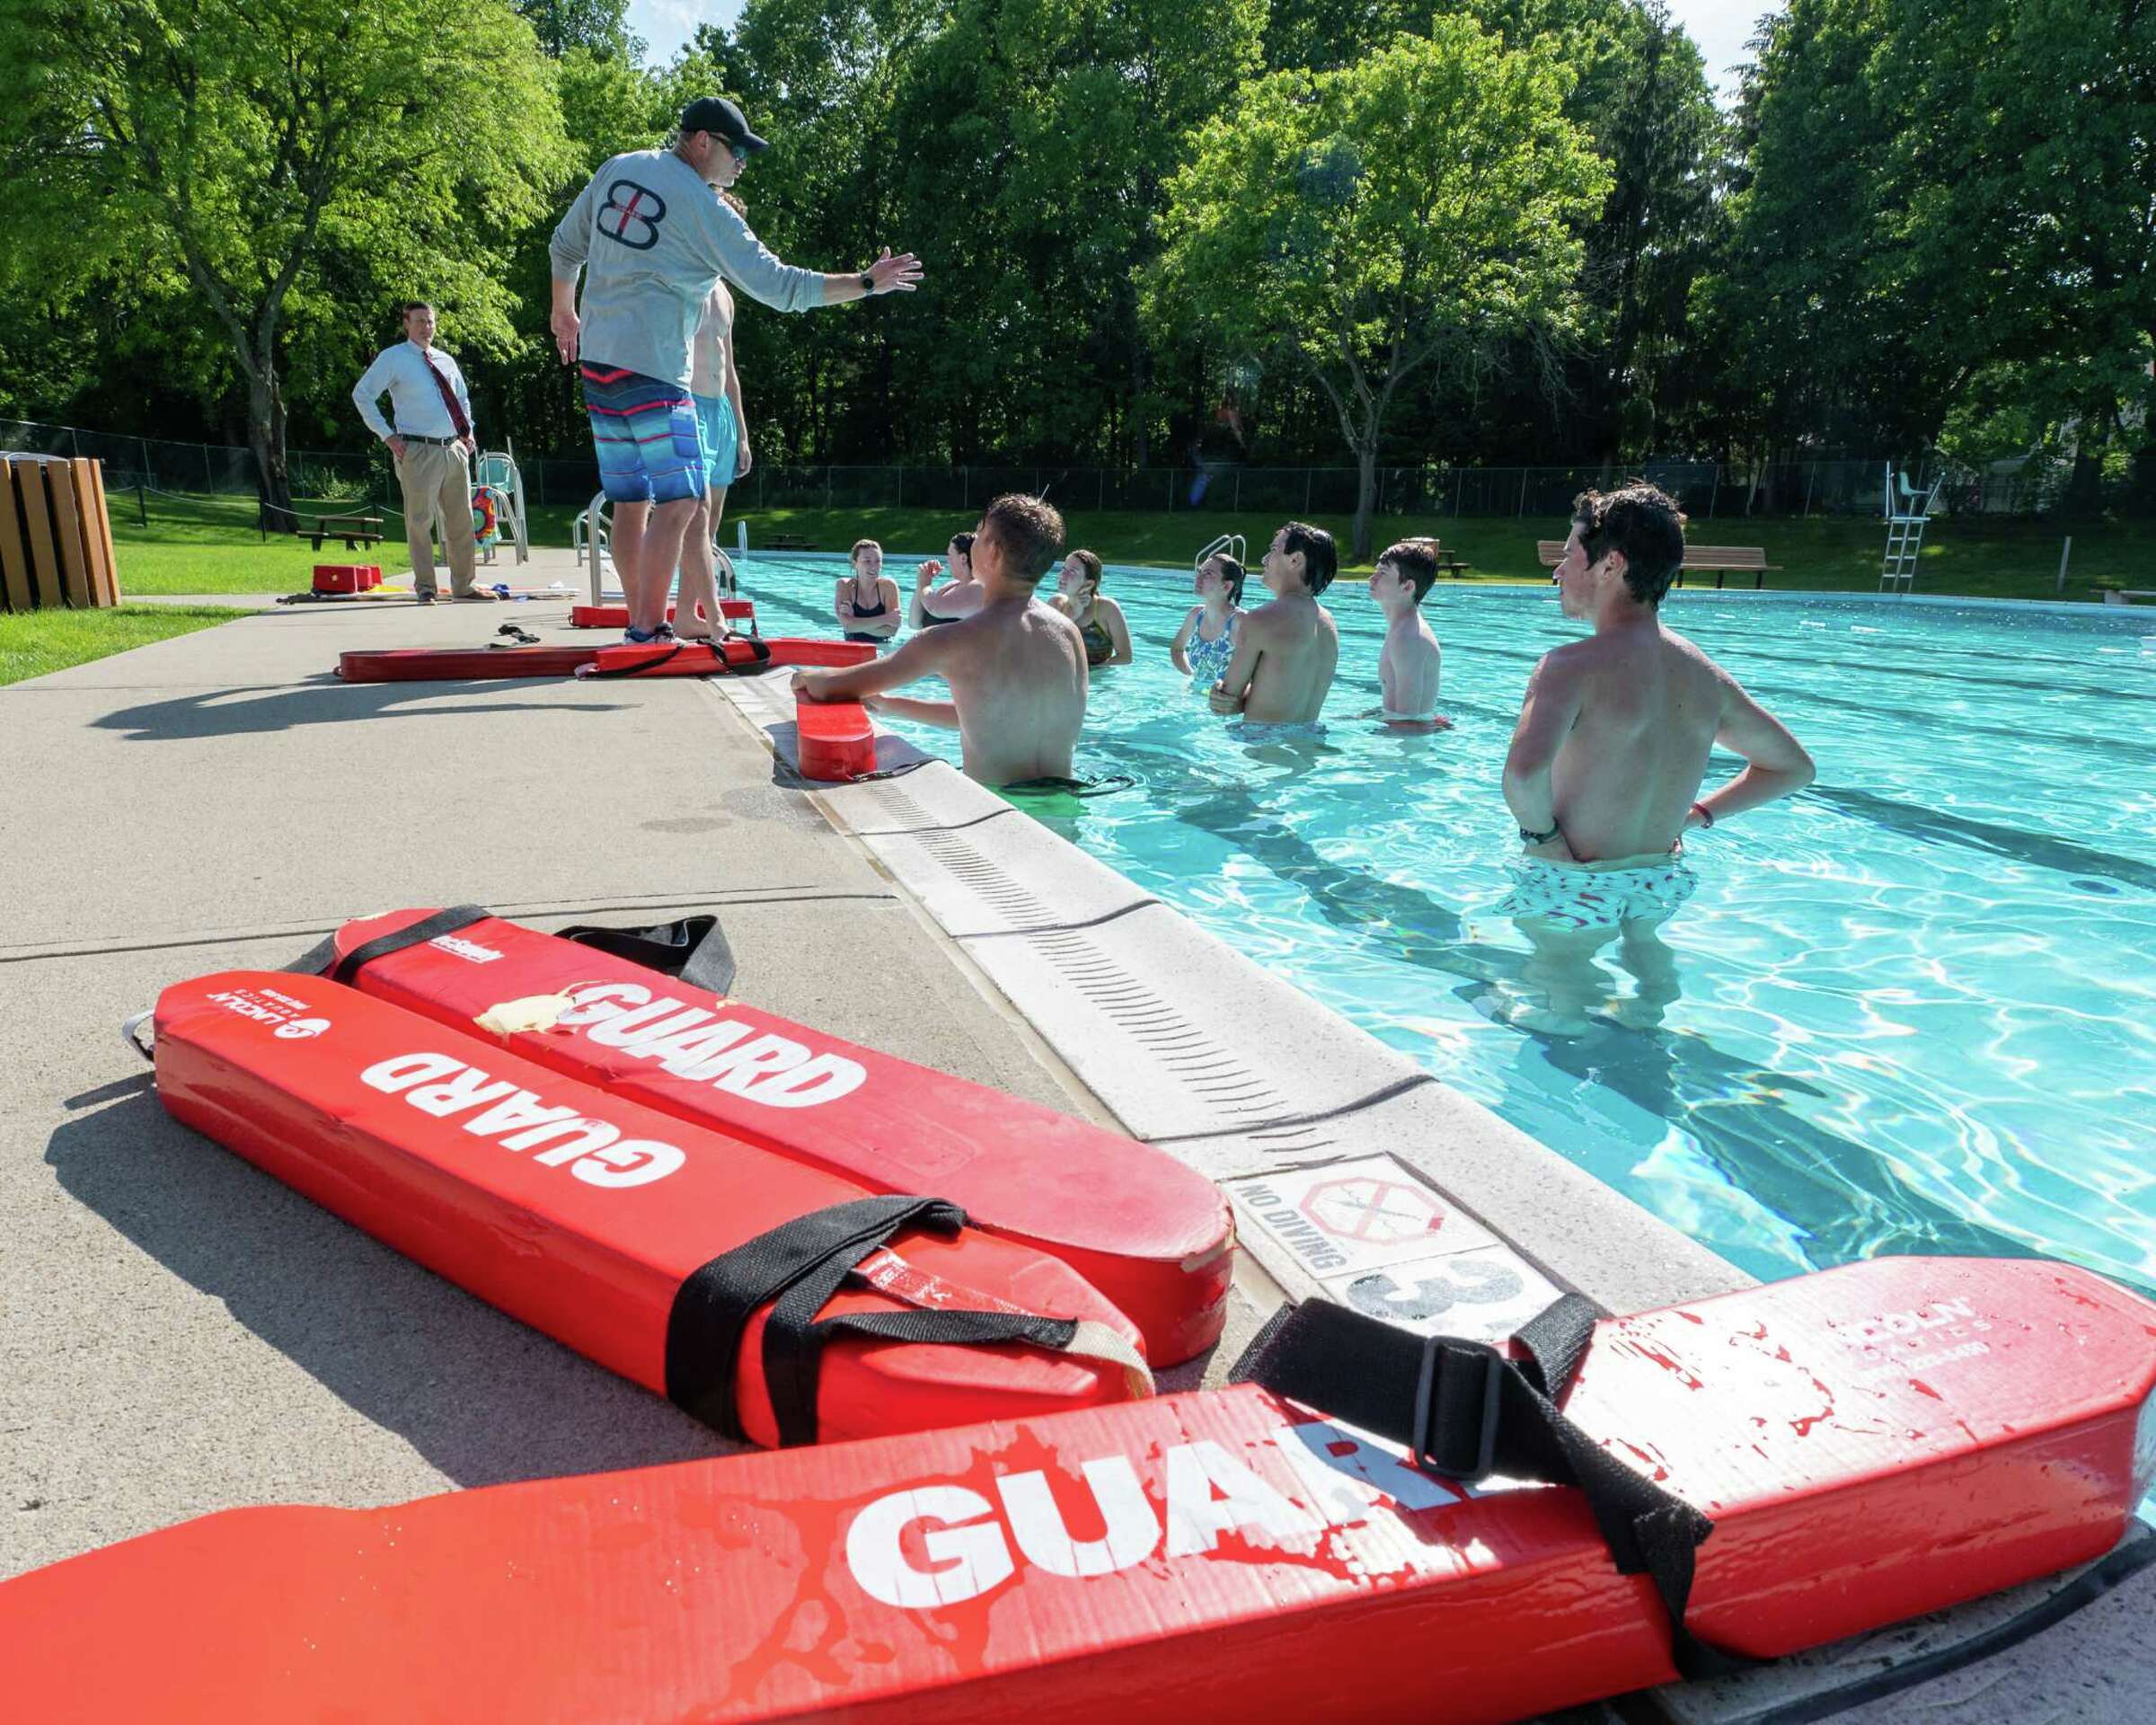 Municipal pools face opening delays because of lifeguard training shortage